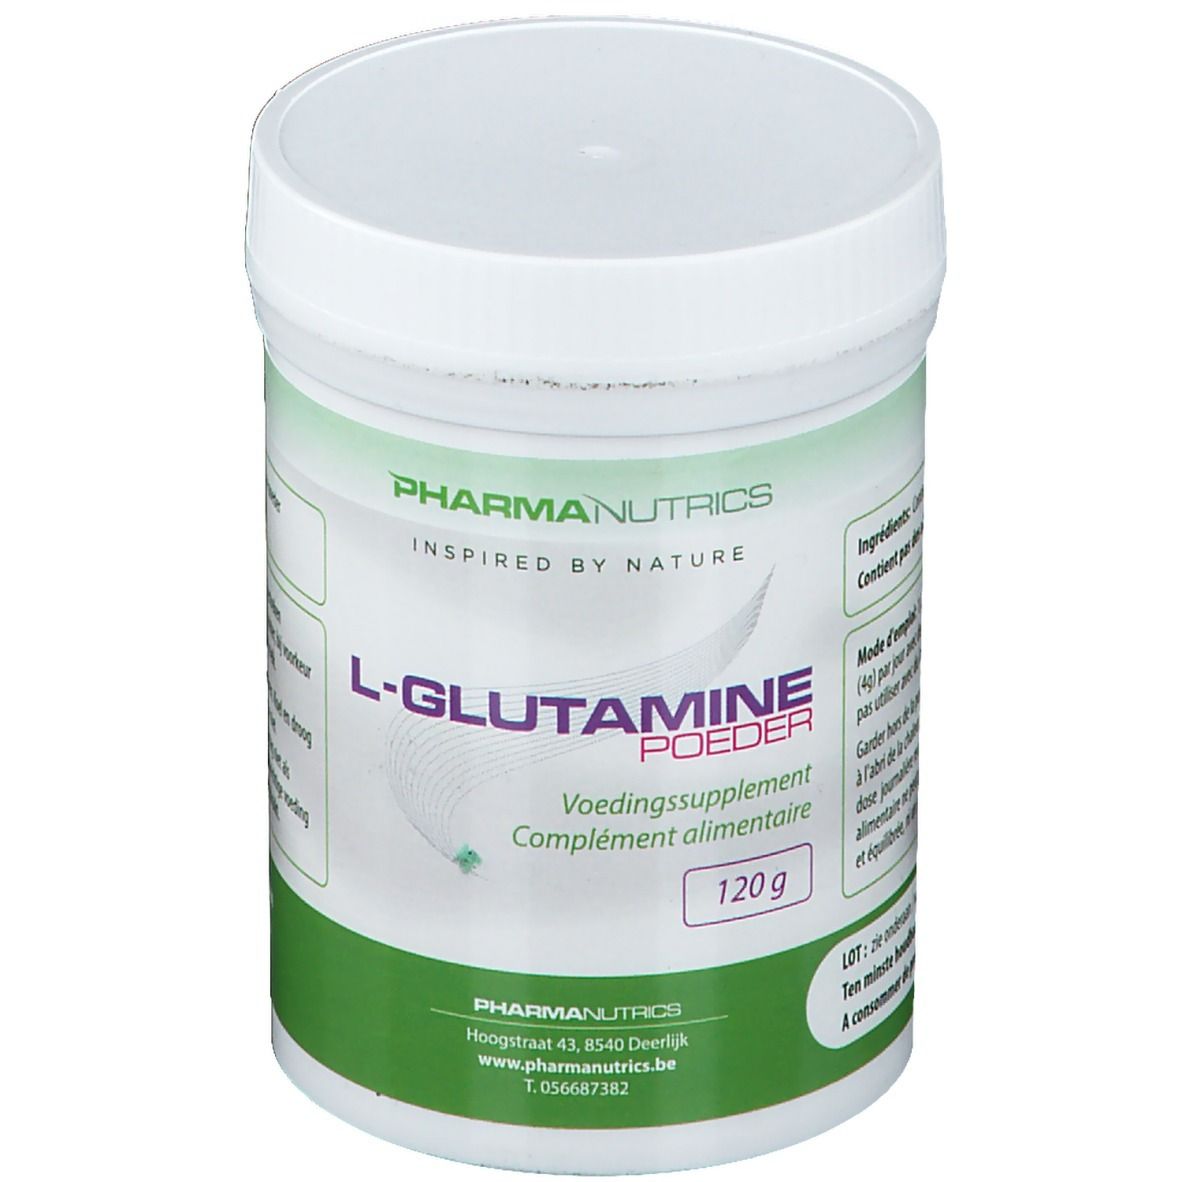 PharmaNutrics L-Glutamine Poudre